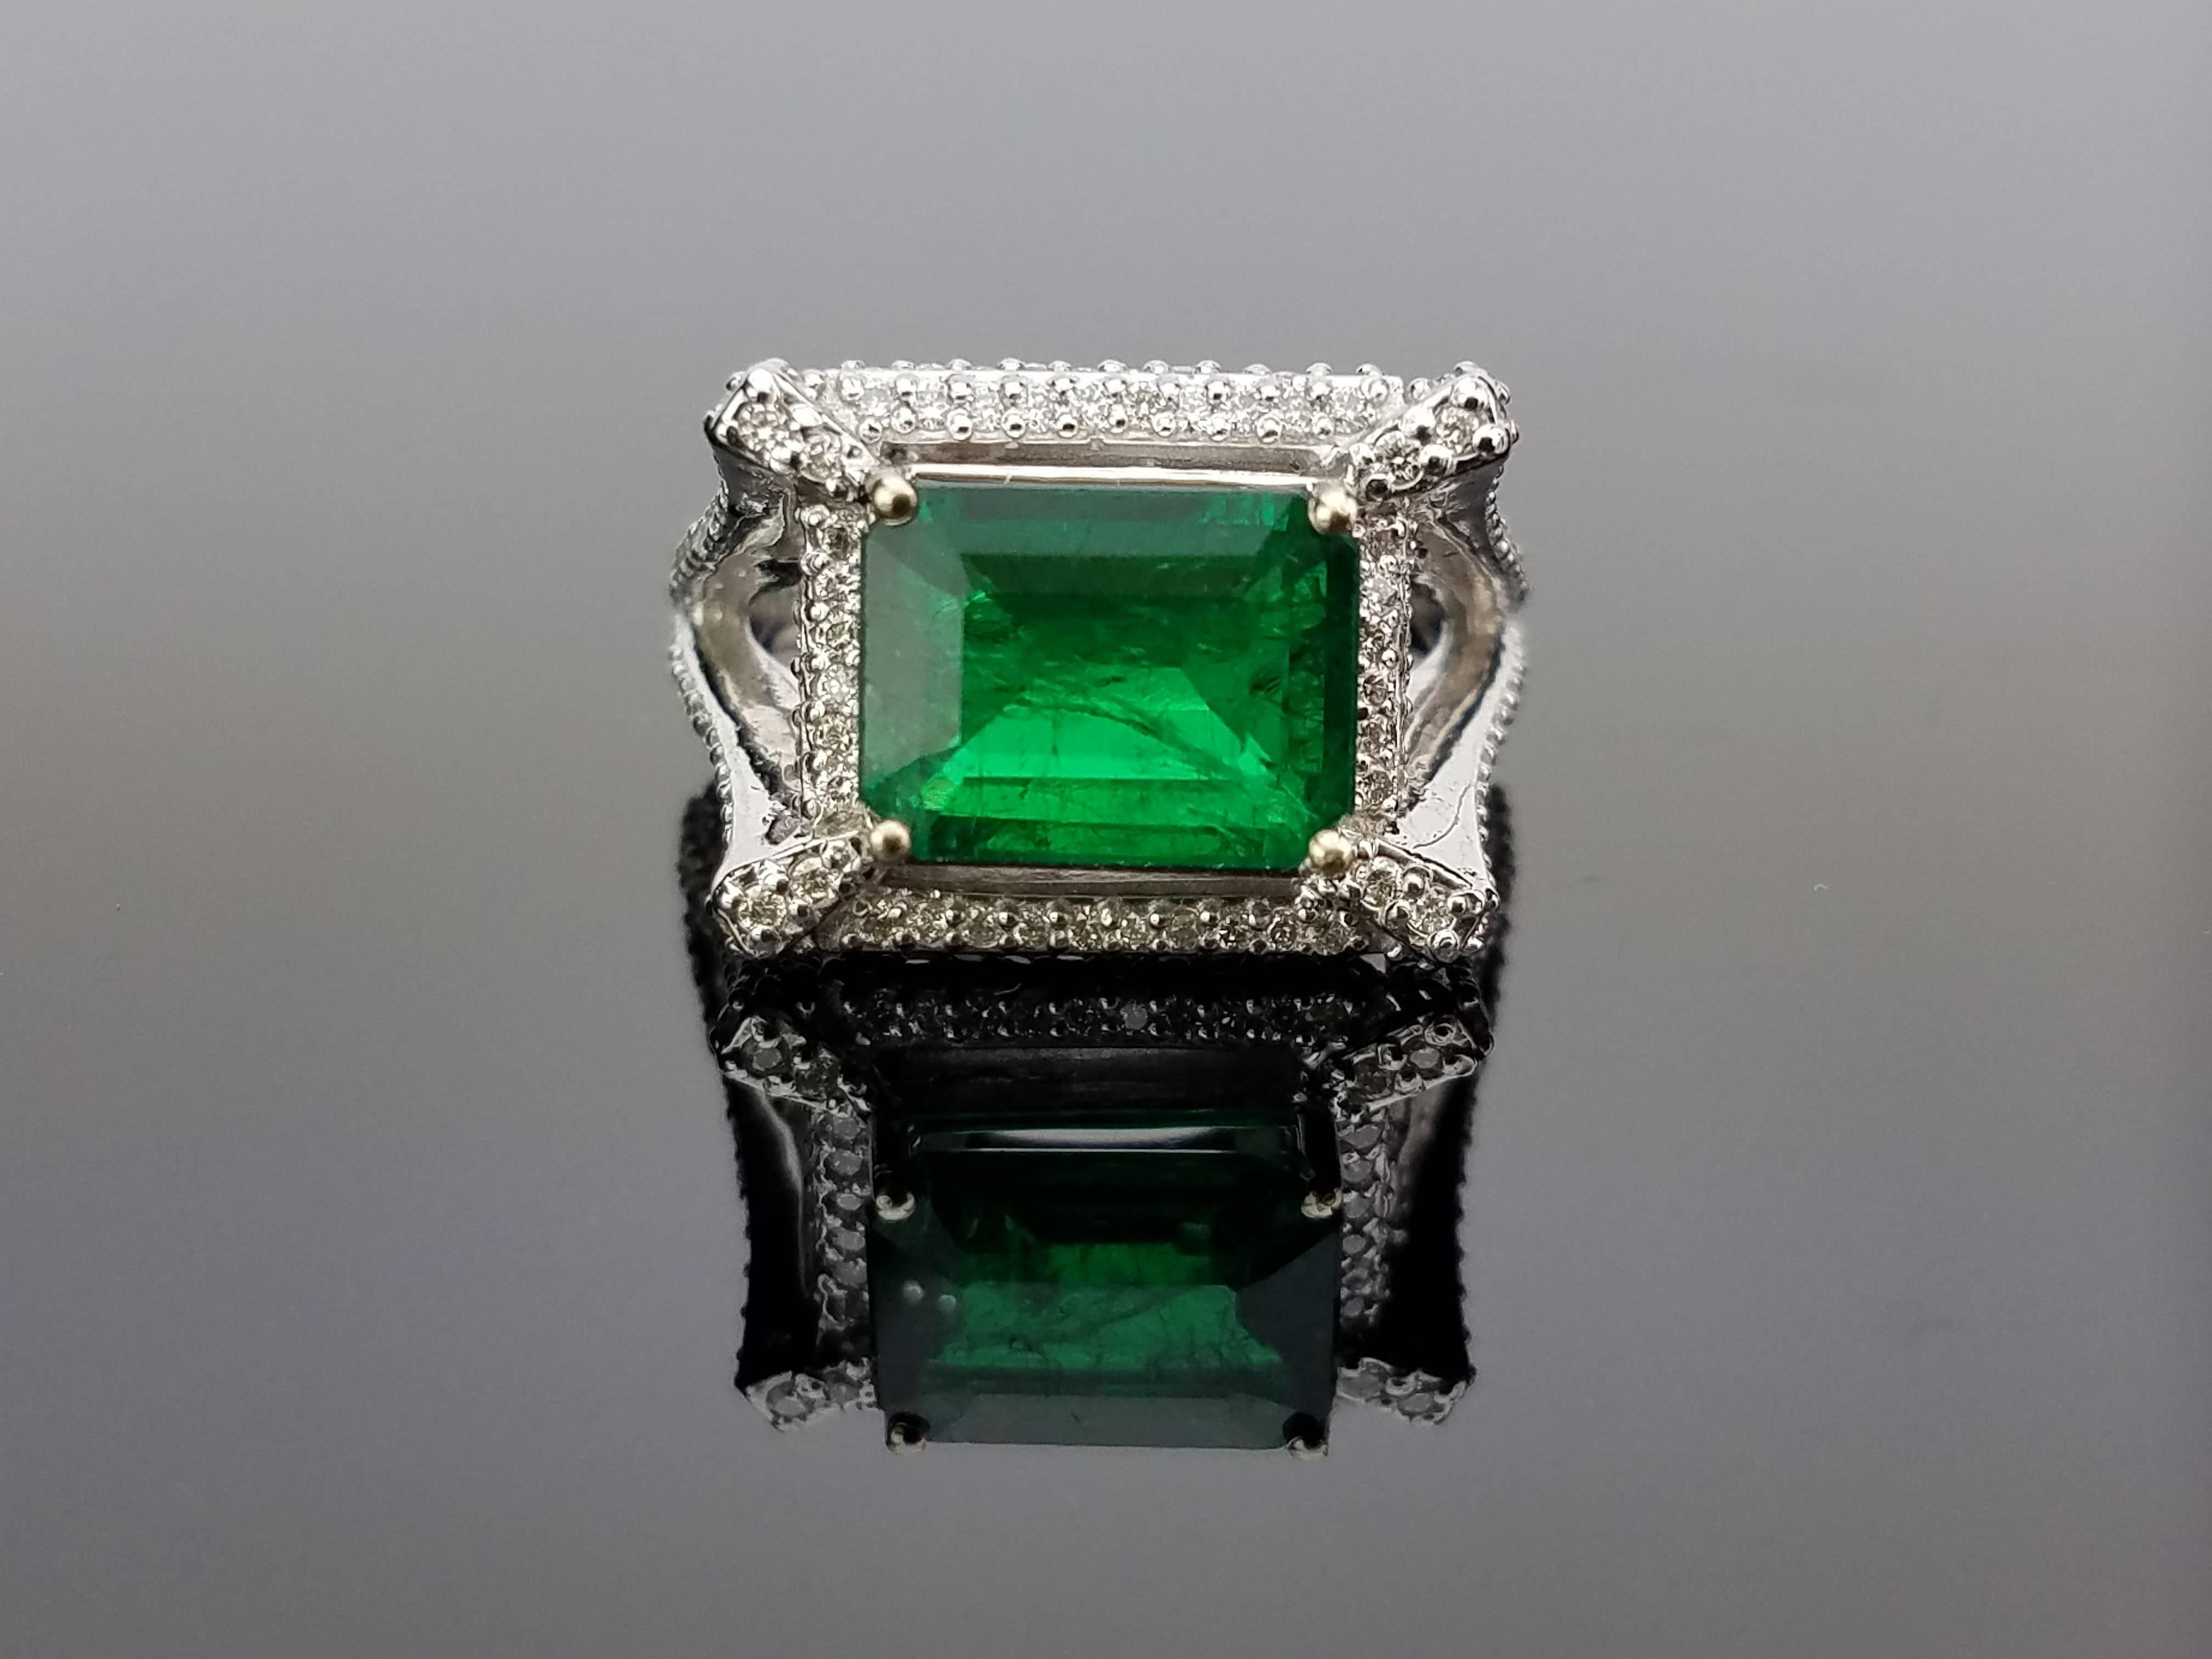 Zambian Emerald Ring with pavé set Diamond on 18K White Gold hoop

Center Stone Details: 
Stone: Emerald
Cut: Emerald Cut
Weight: 3.16 carat 

Diamond Details: 
Cut: Brilliant (round)
Total Carat Weight: 1.17 carat 
Quality: VS/SI , H/I 

18K Gold: